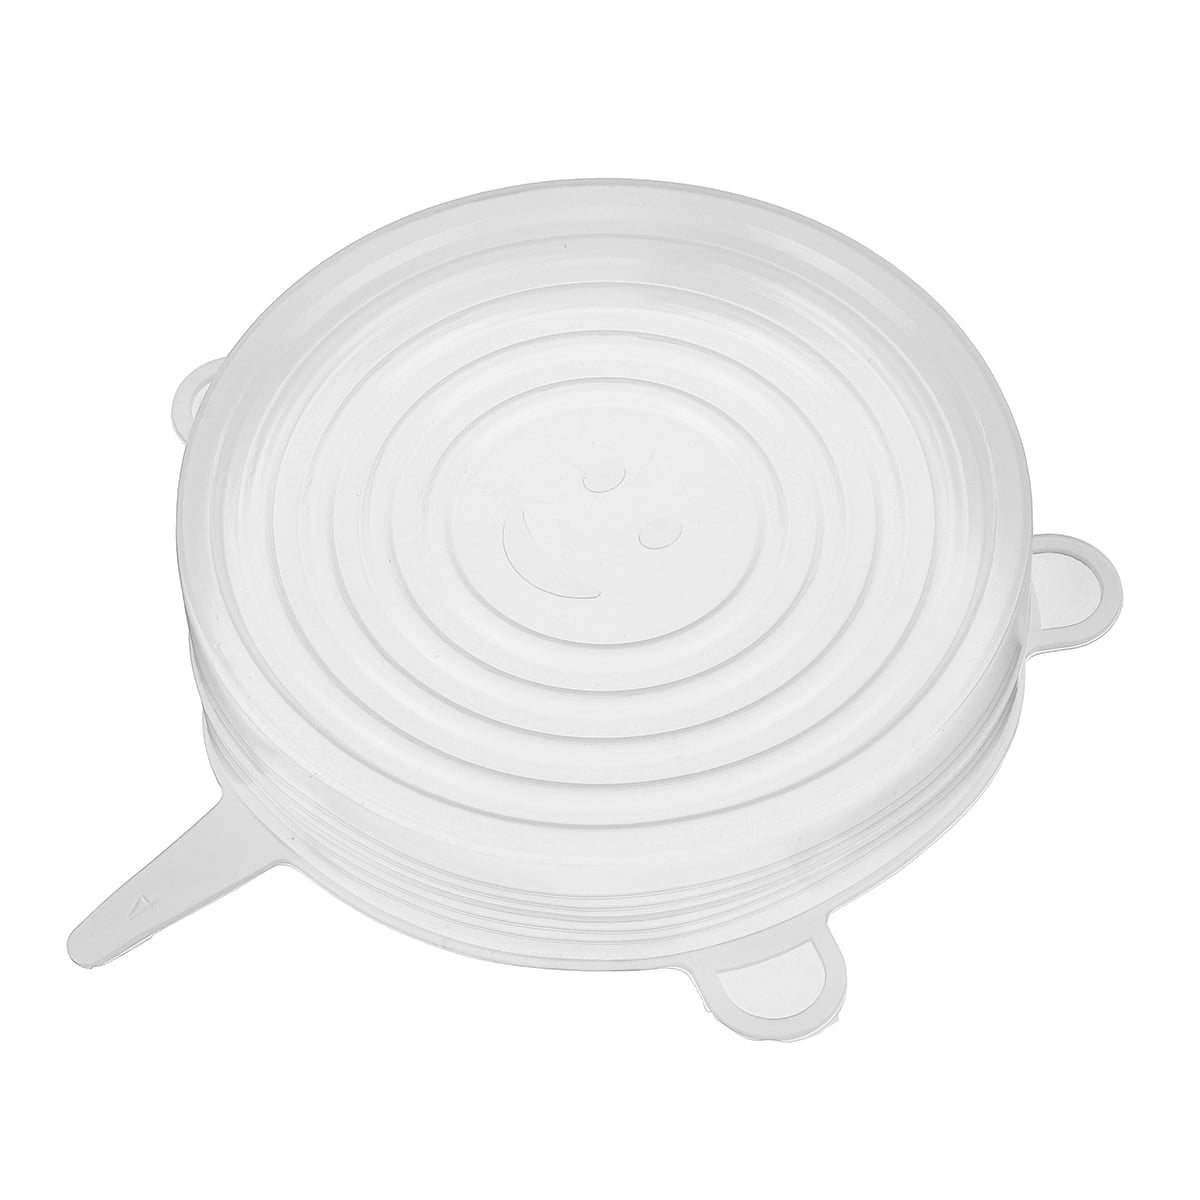 6Pcs Universal Silicone Stretch Lids Suction Cover Cooking Pot Lid-Bowl Pan SET 